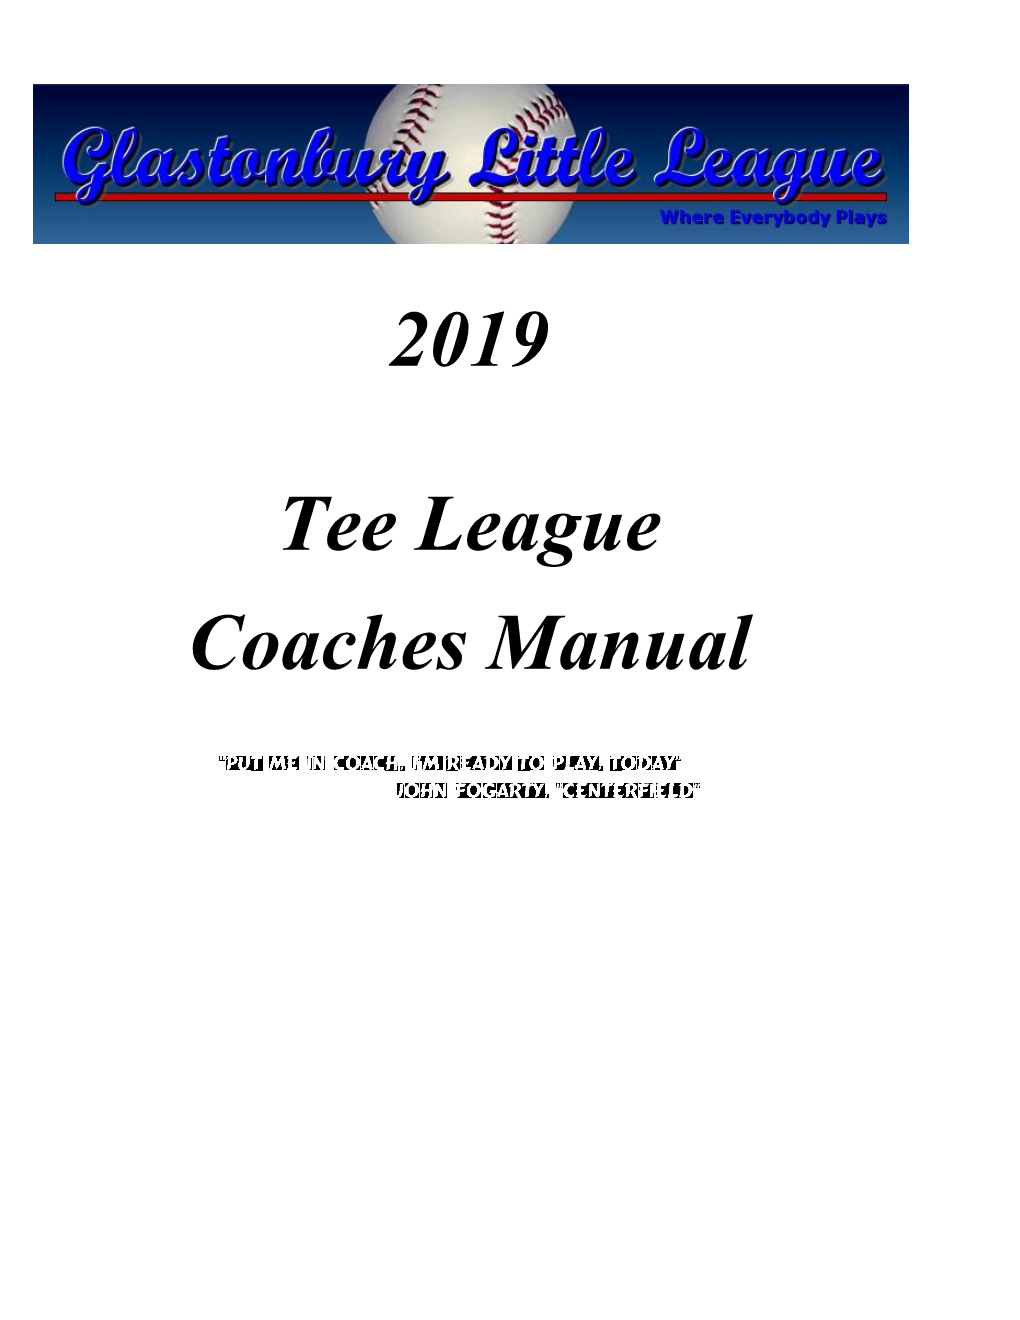 Tee League Manual